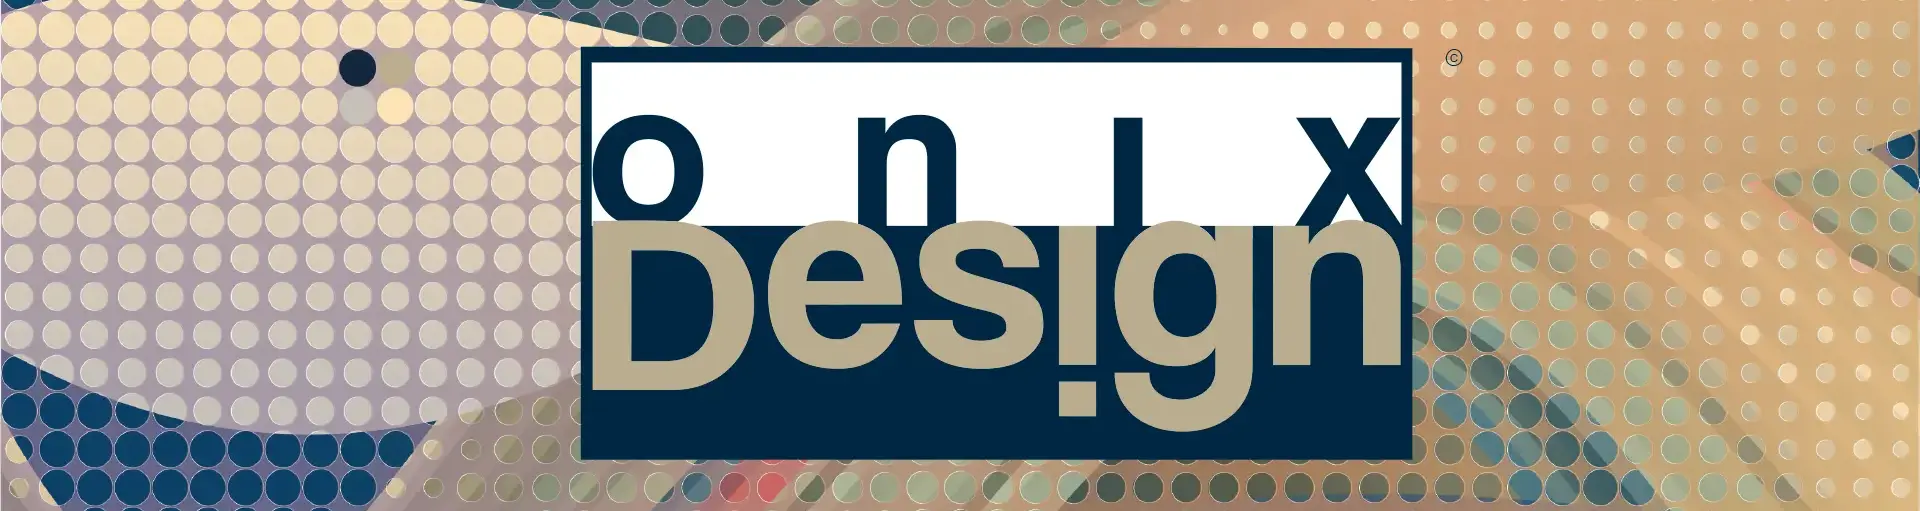 Blog; Björn Grun - Grafikdesigner - Blog; Björn Grun - Grafikdesigner, Corporate Design, Illustration, Software, Hardware, Eigene Projekte